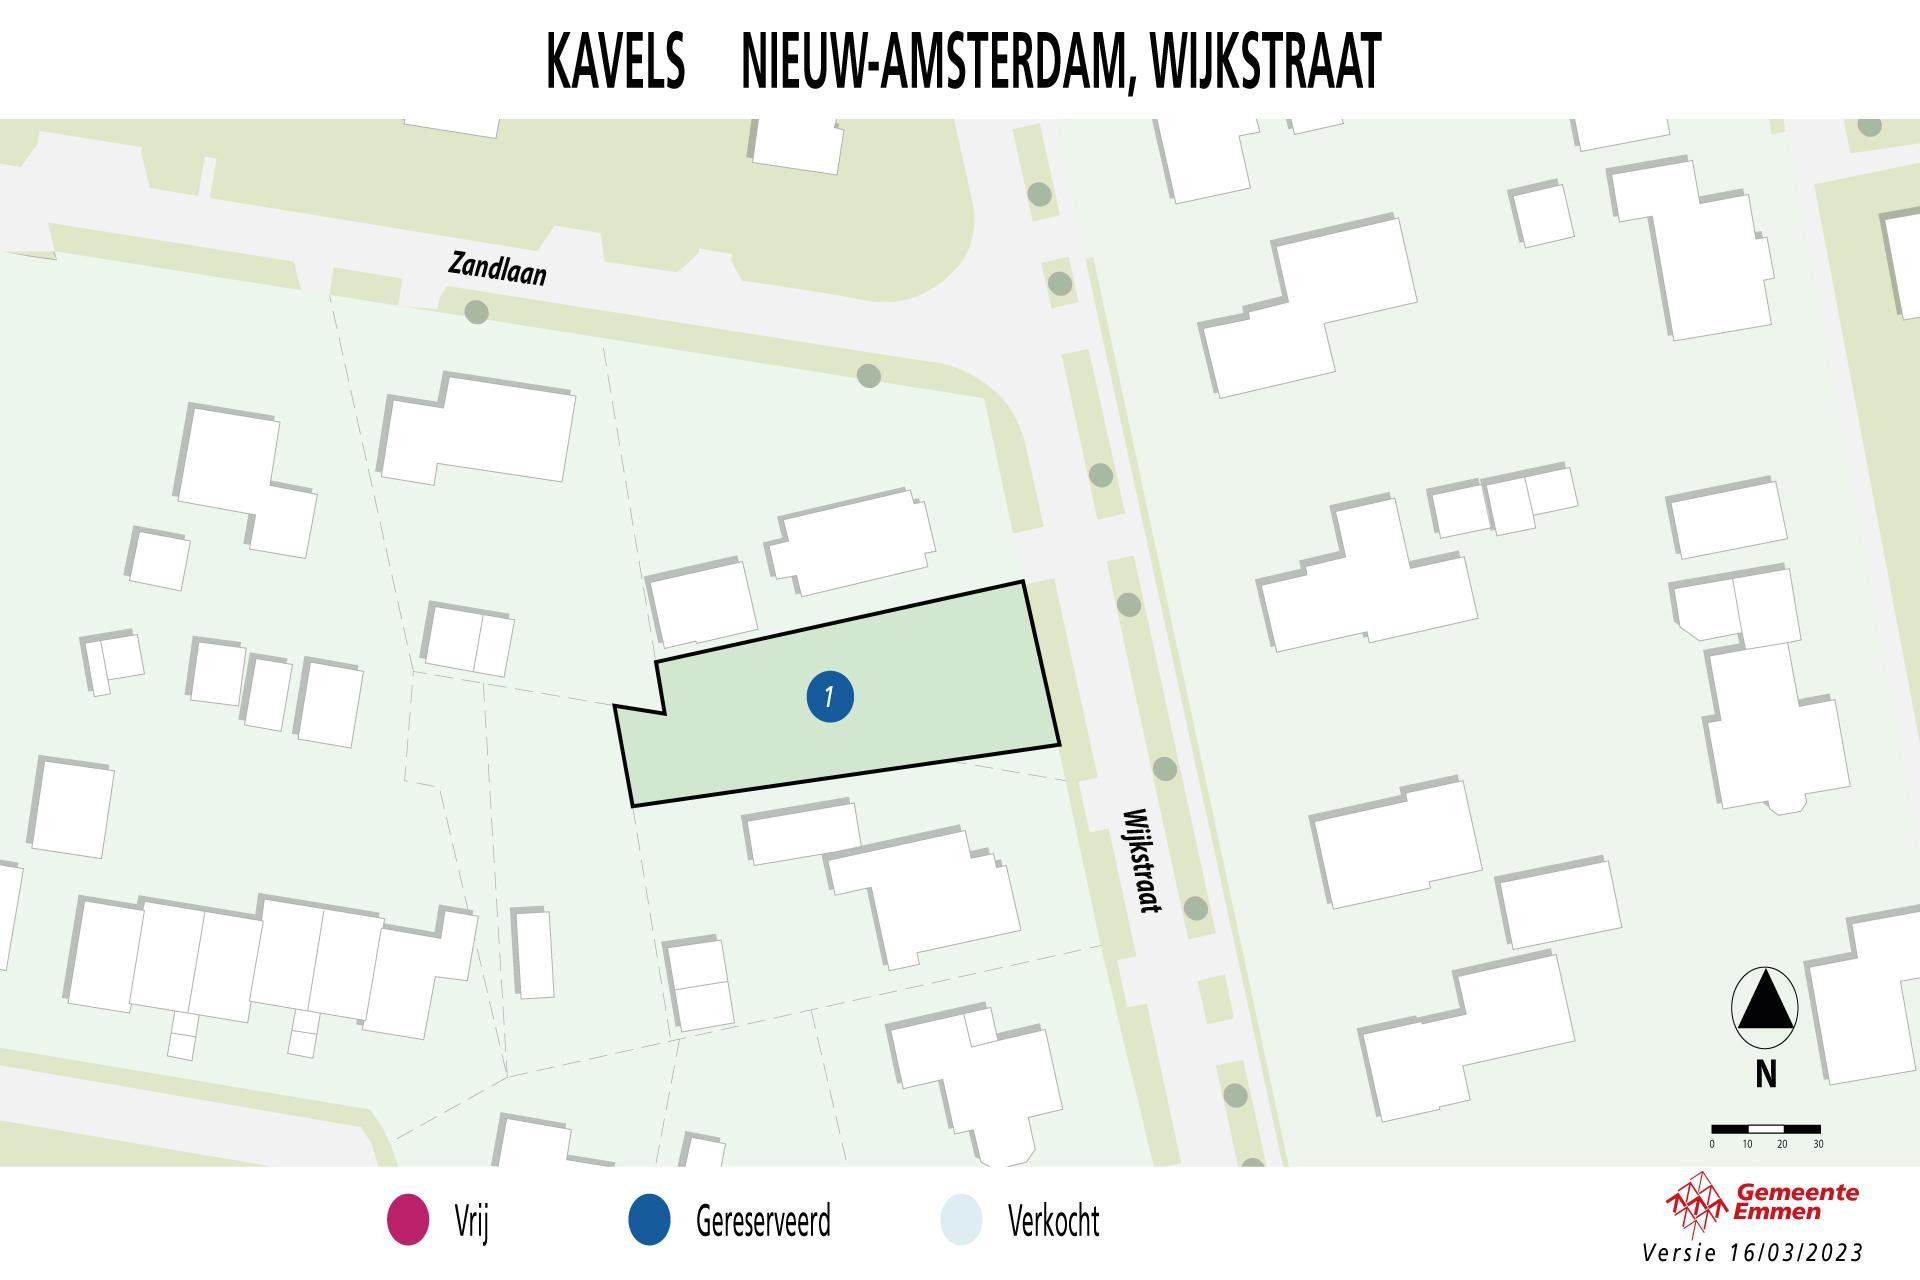 Kaart met kavels in Nieuw-Amsterdam